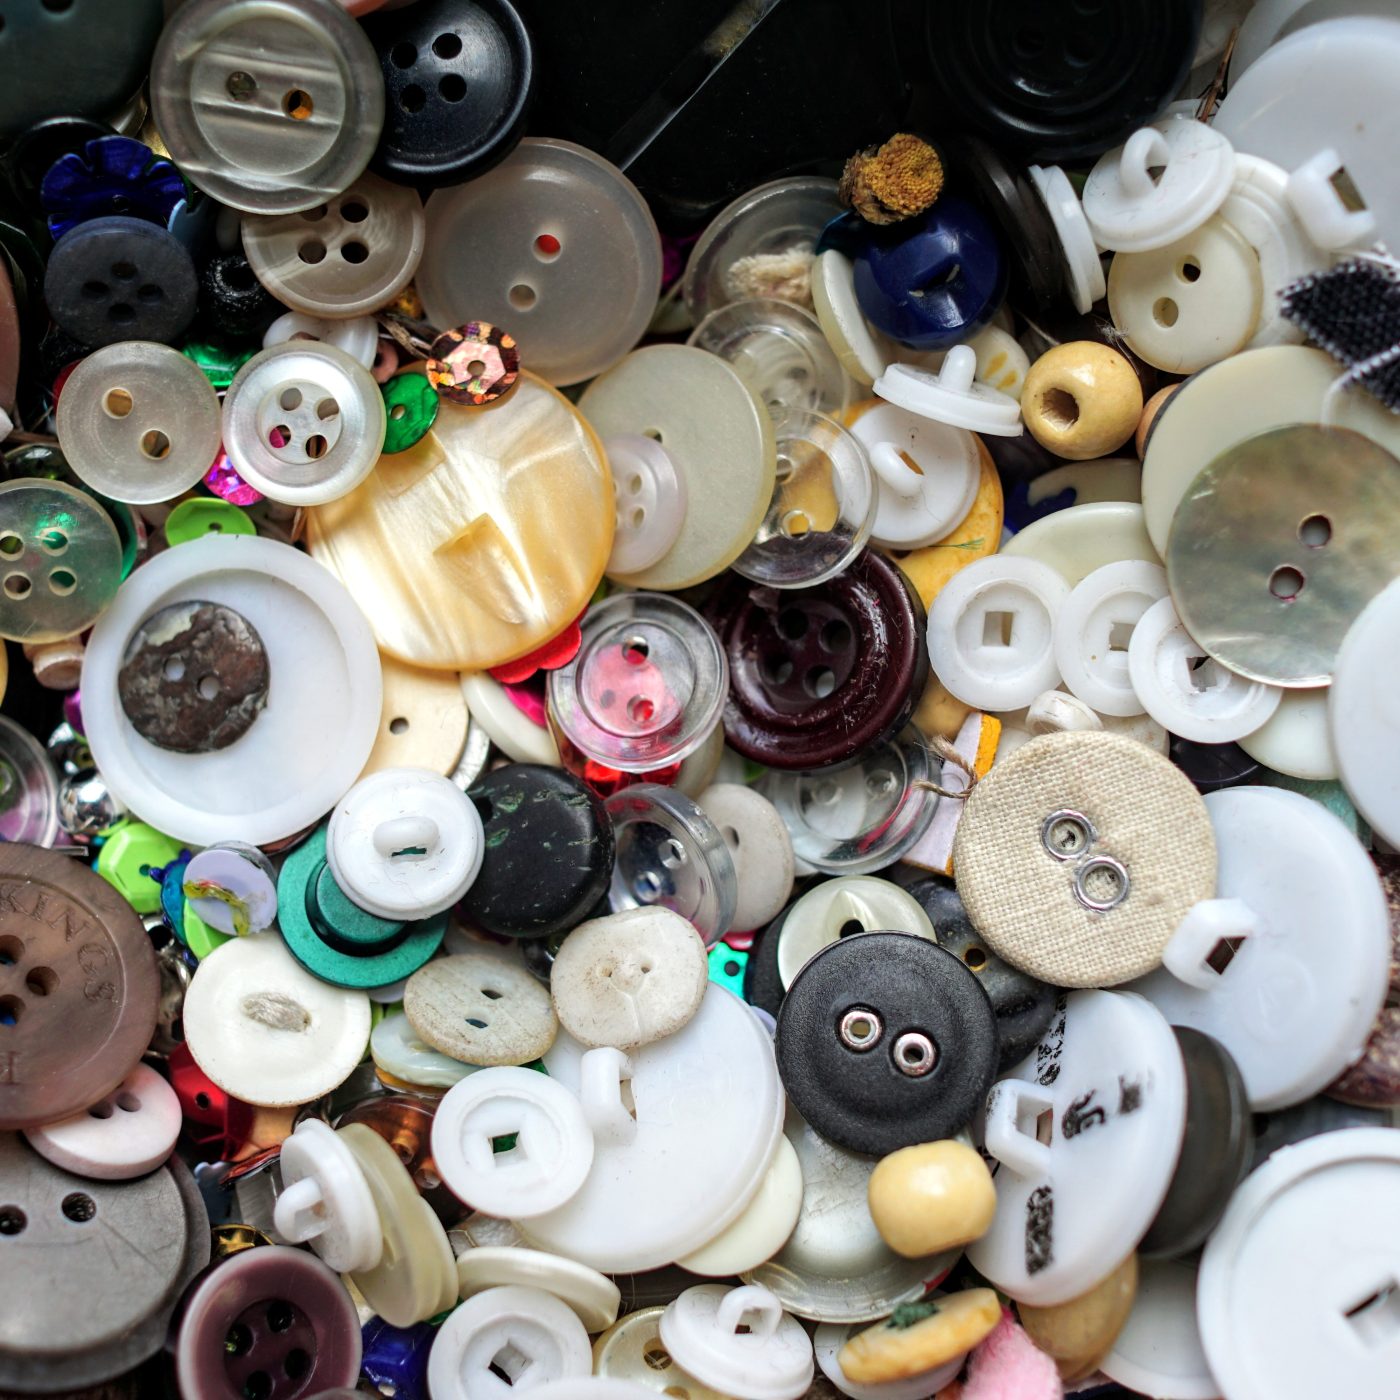 An assortment of vintage buttons